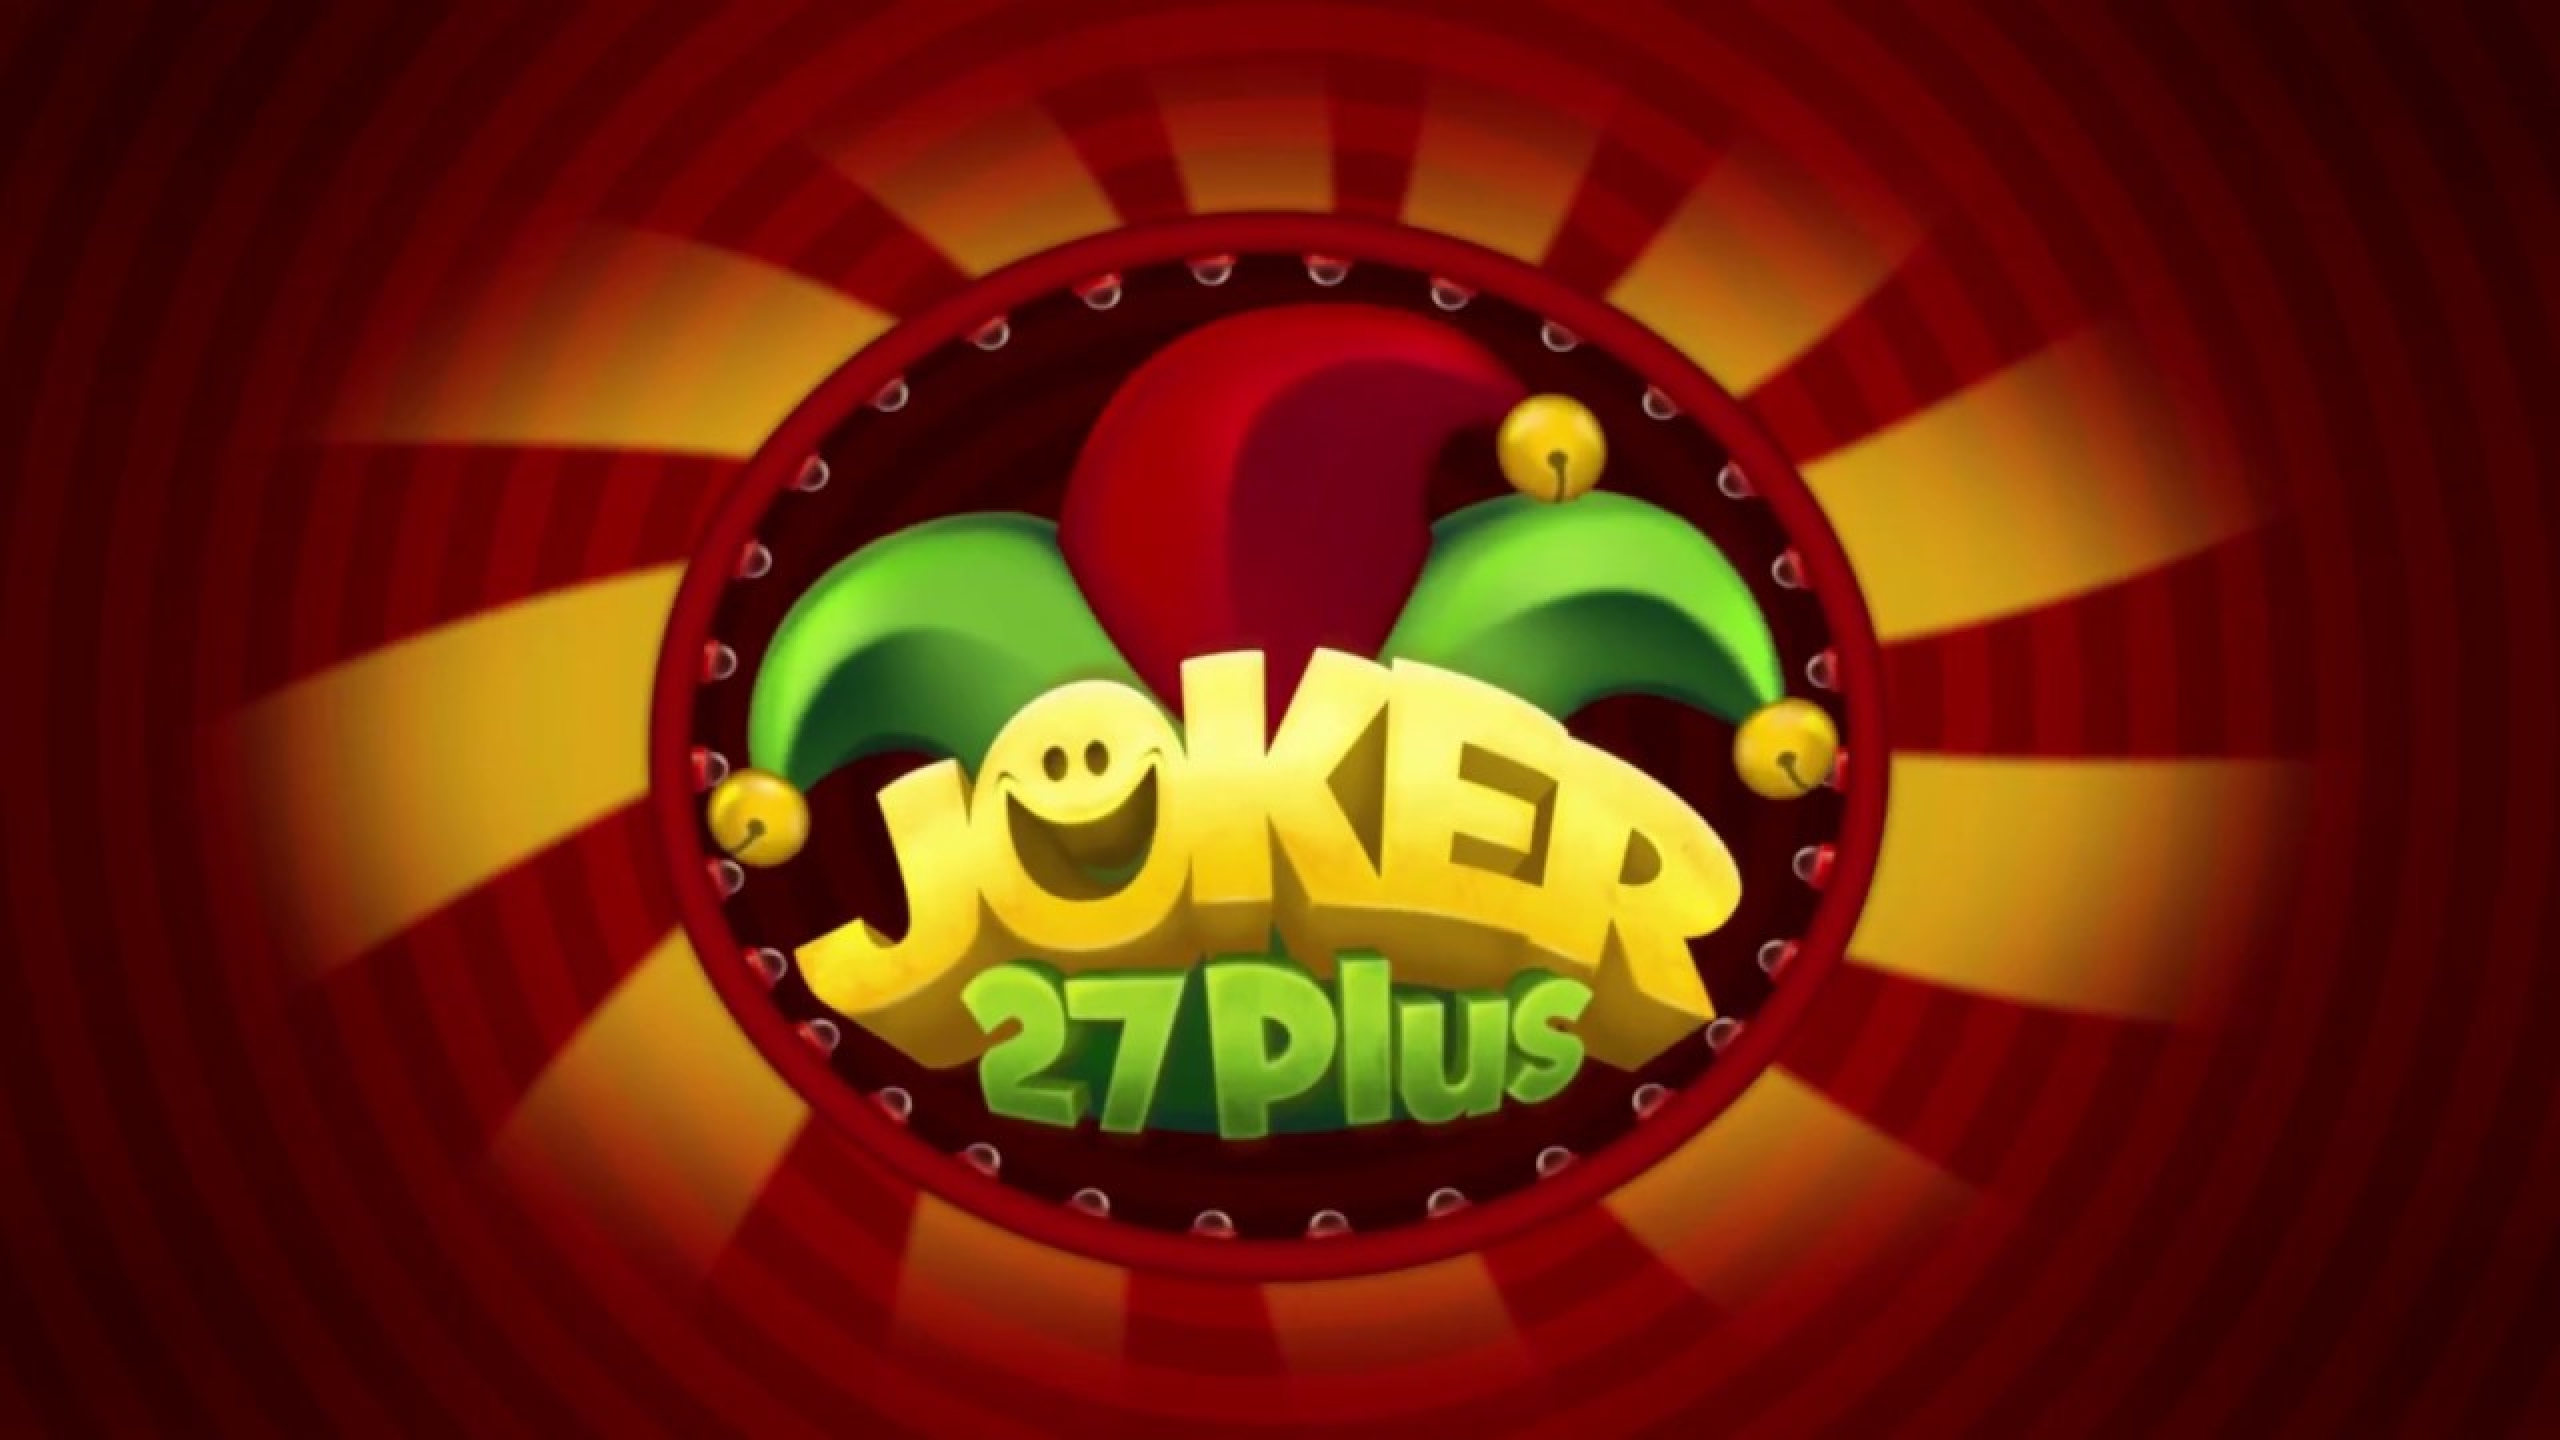 Live play on Joker 27 (Kajot) slot machine